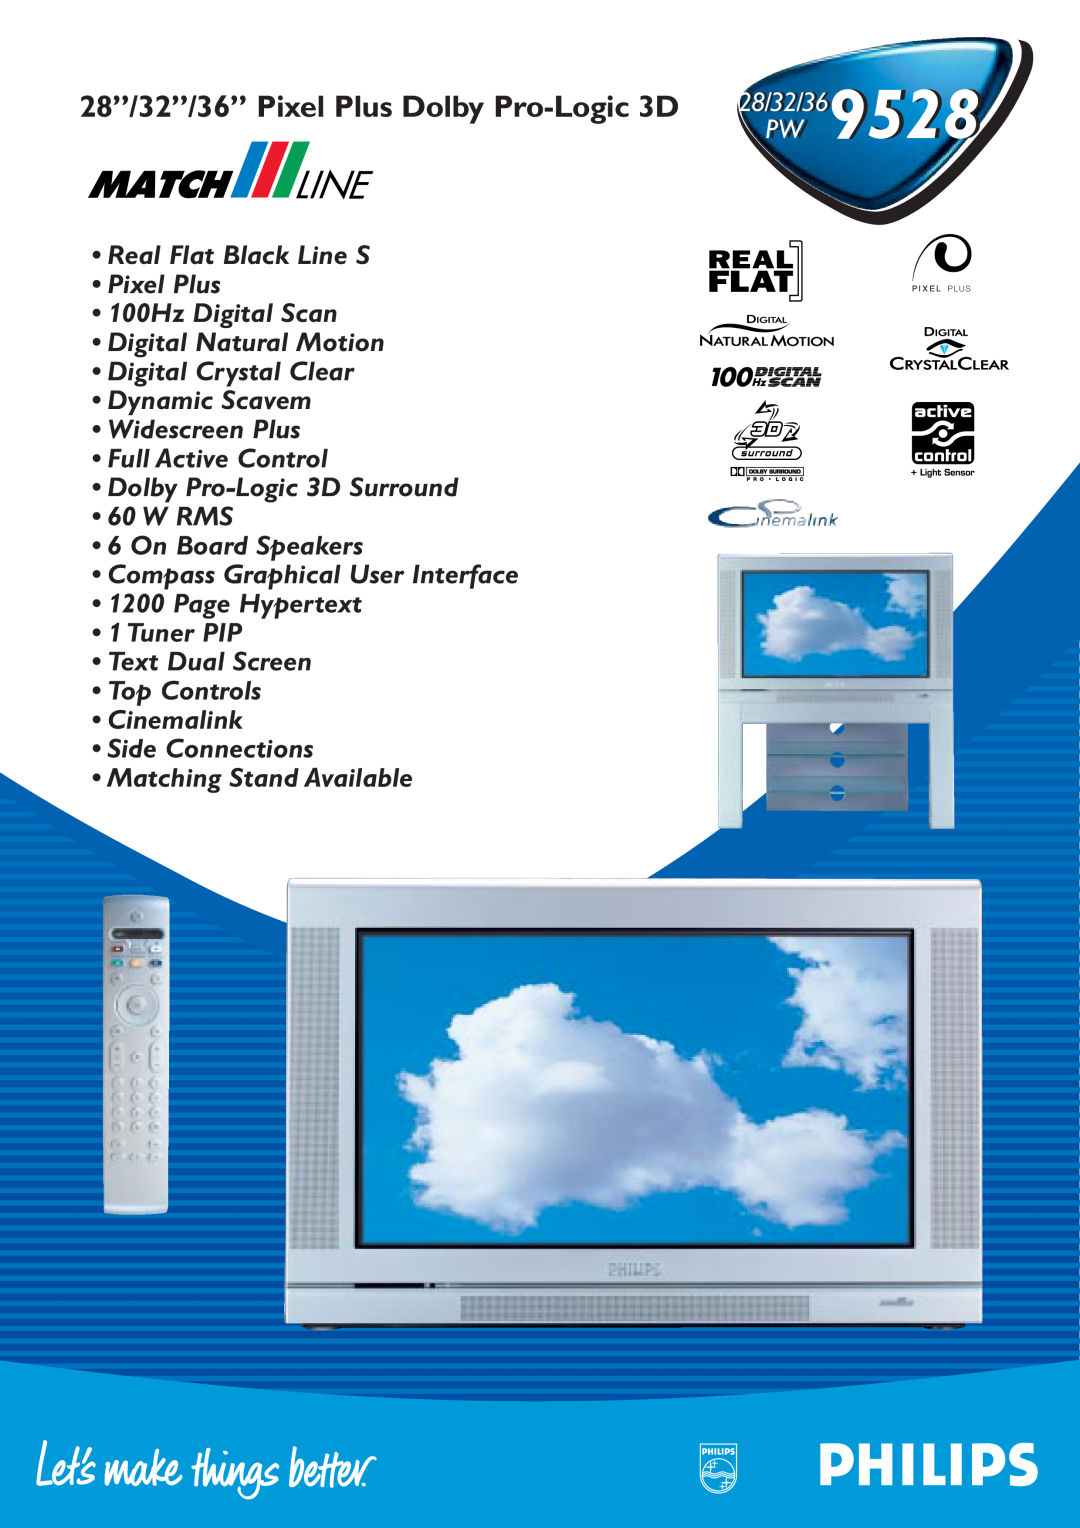 Philips 28PW9528, 32PW9528, 36PW9528 manual 28”/32”/36” Pixel Plus Dolby Pro-Logic 3D 28/32/36 